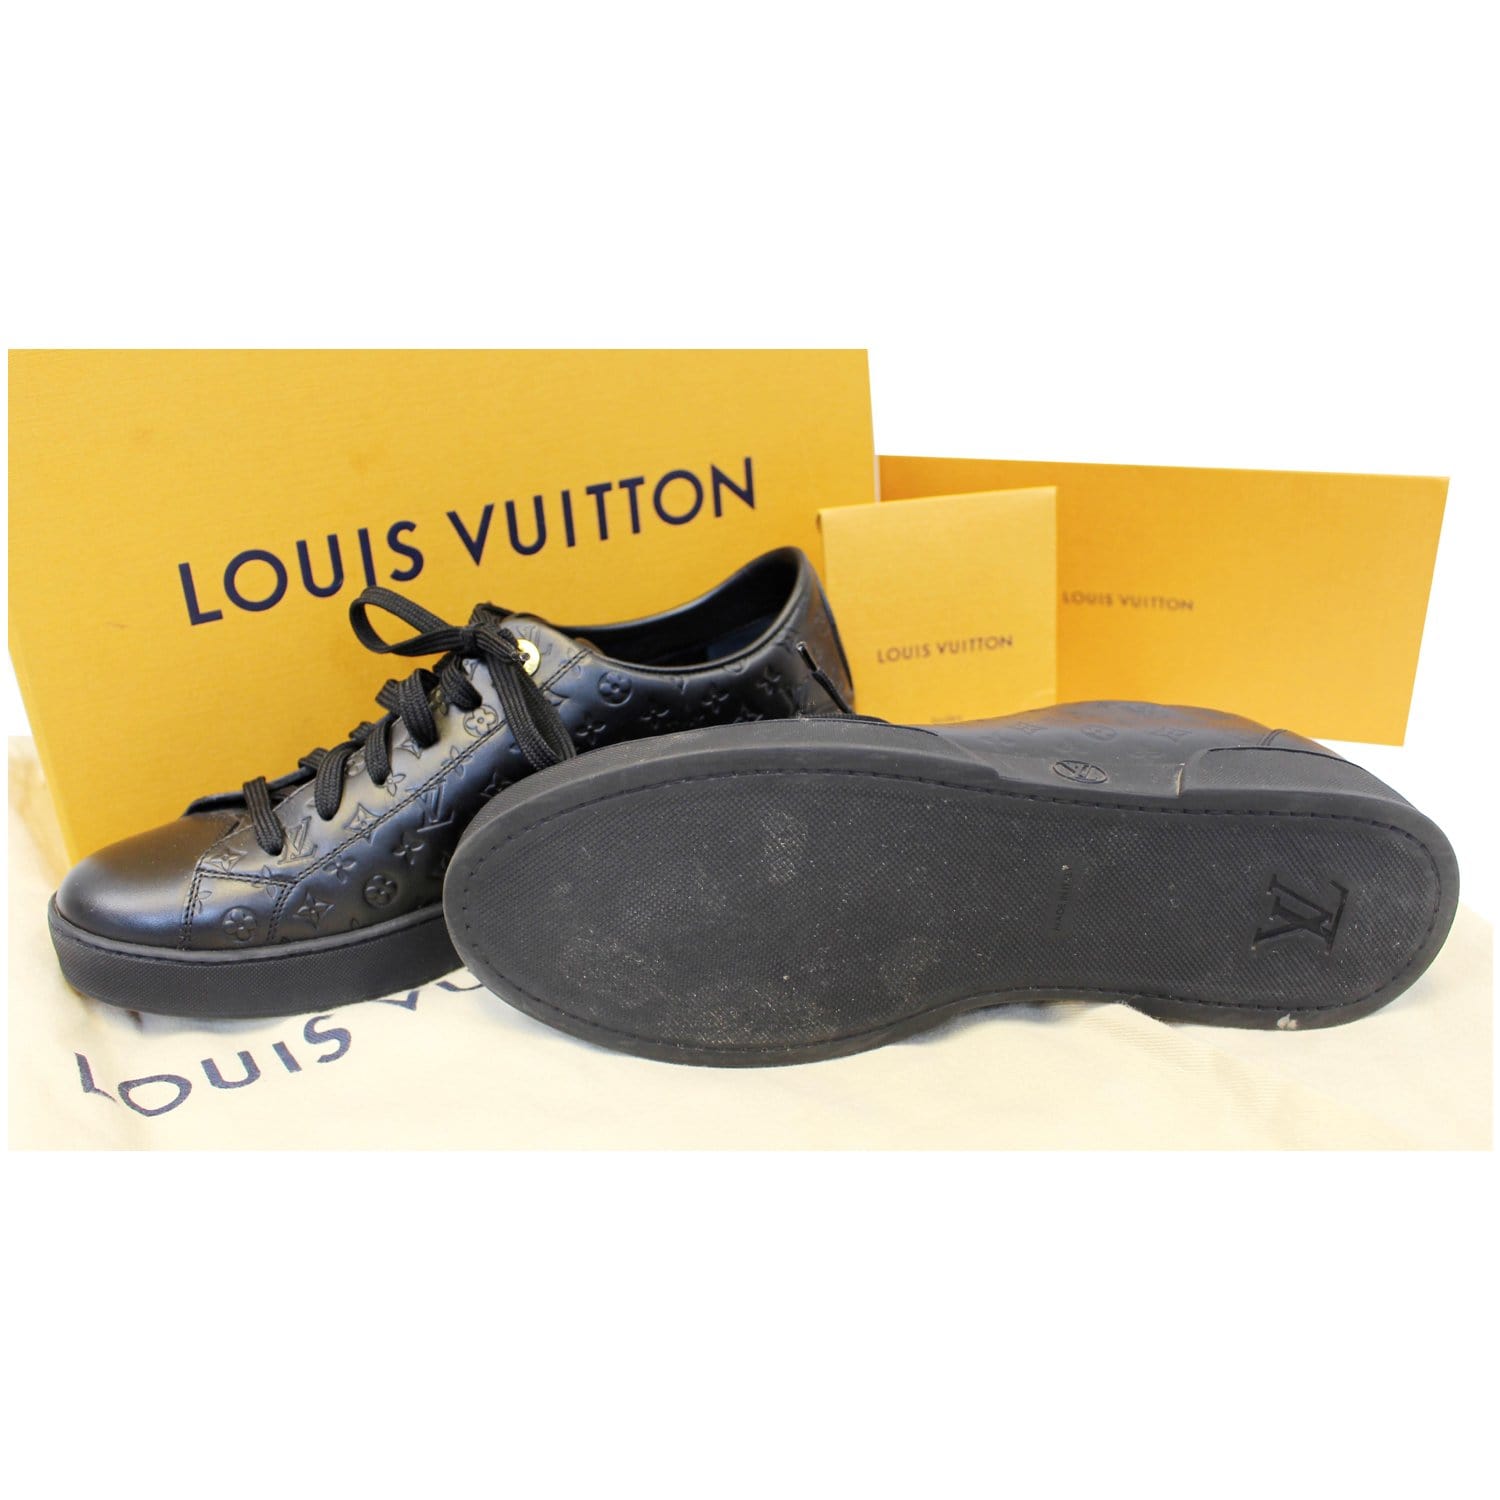 Dây nịt Louis Vuitton caro đen trắng initiales